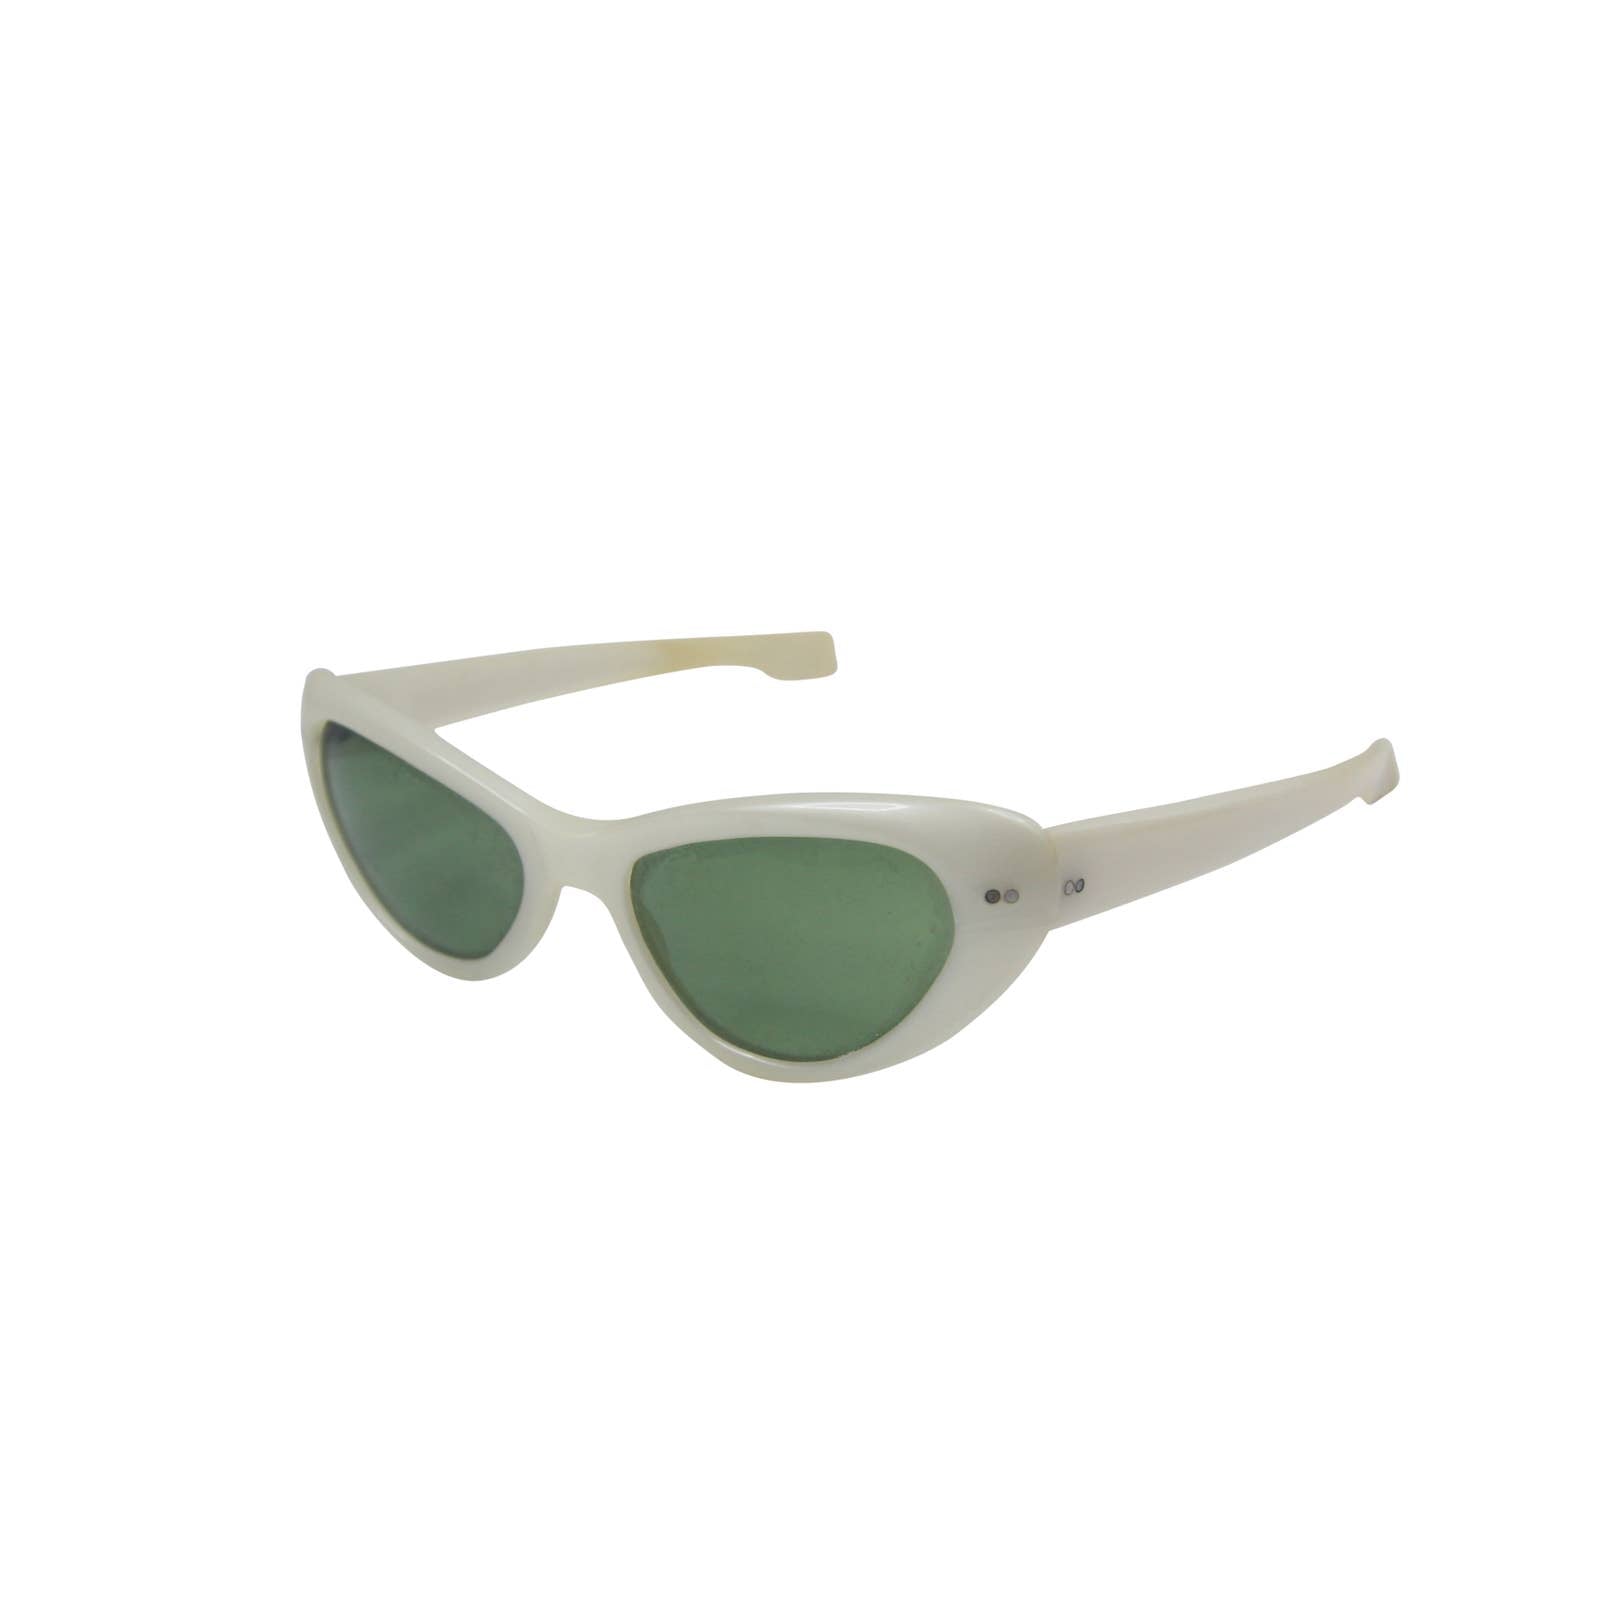 Cat Eye sunglasses, 50s & 60s sunglasses